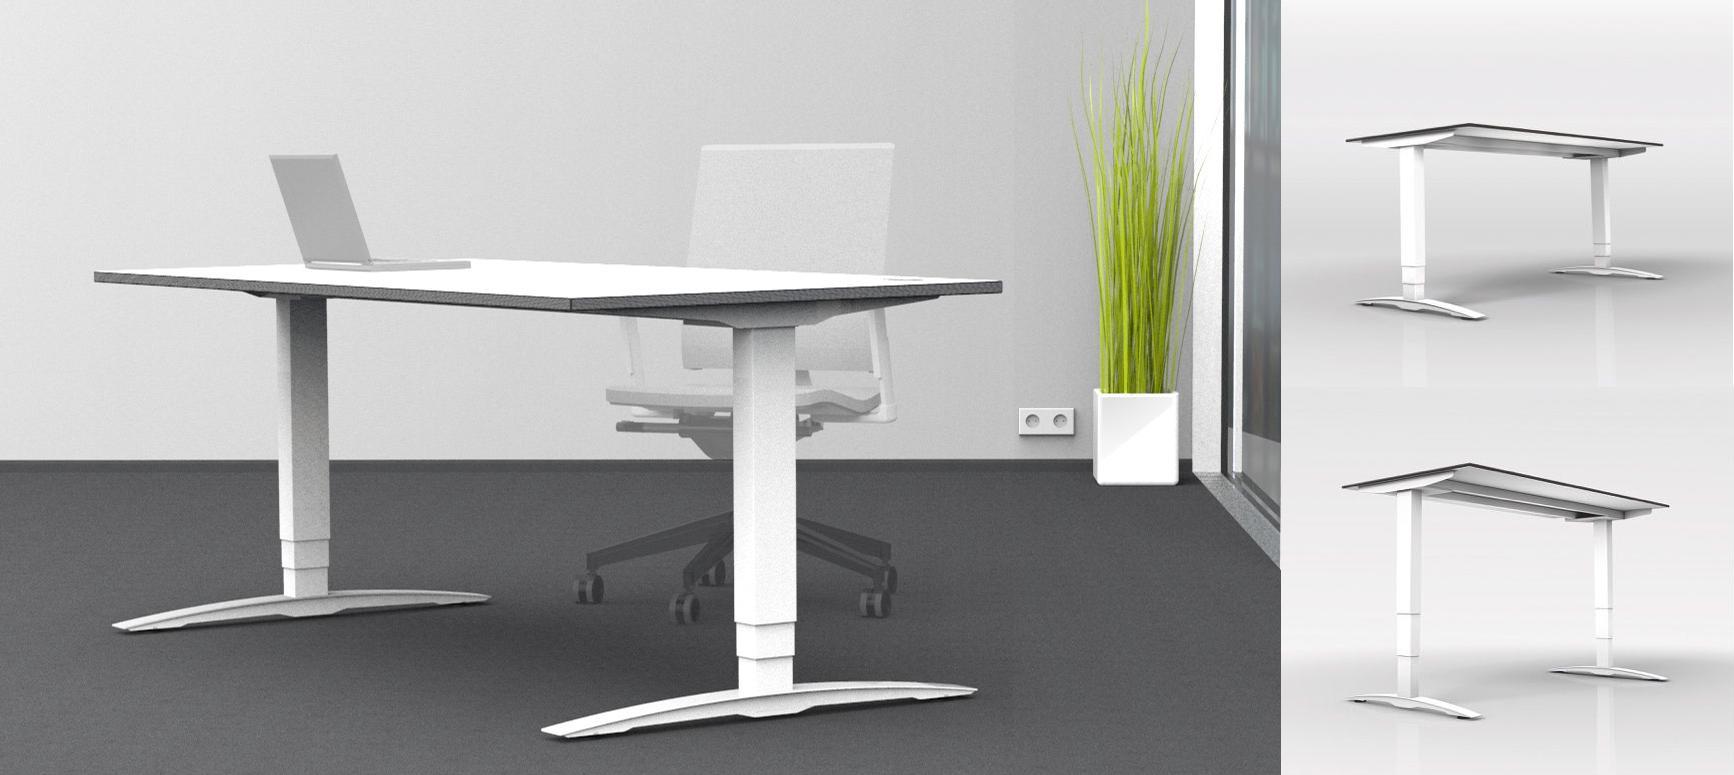 Freestand height adjustable work table - desk